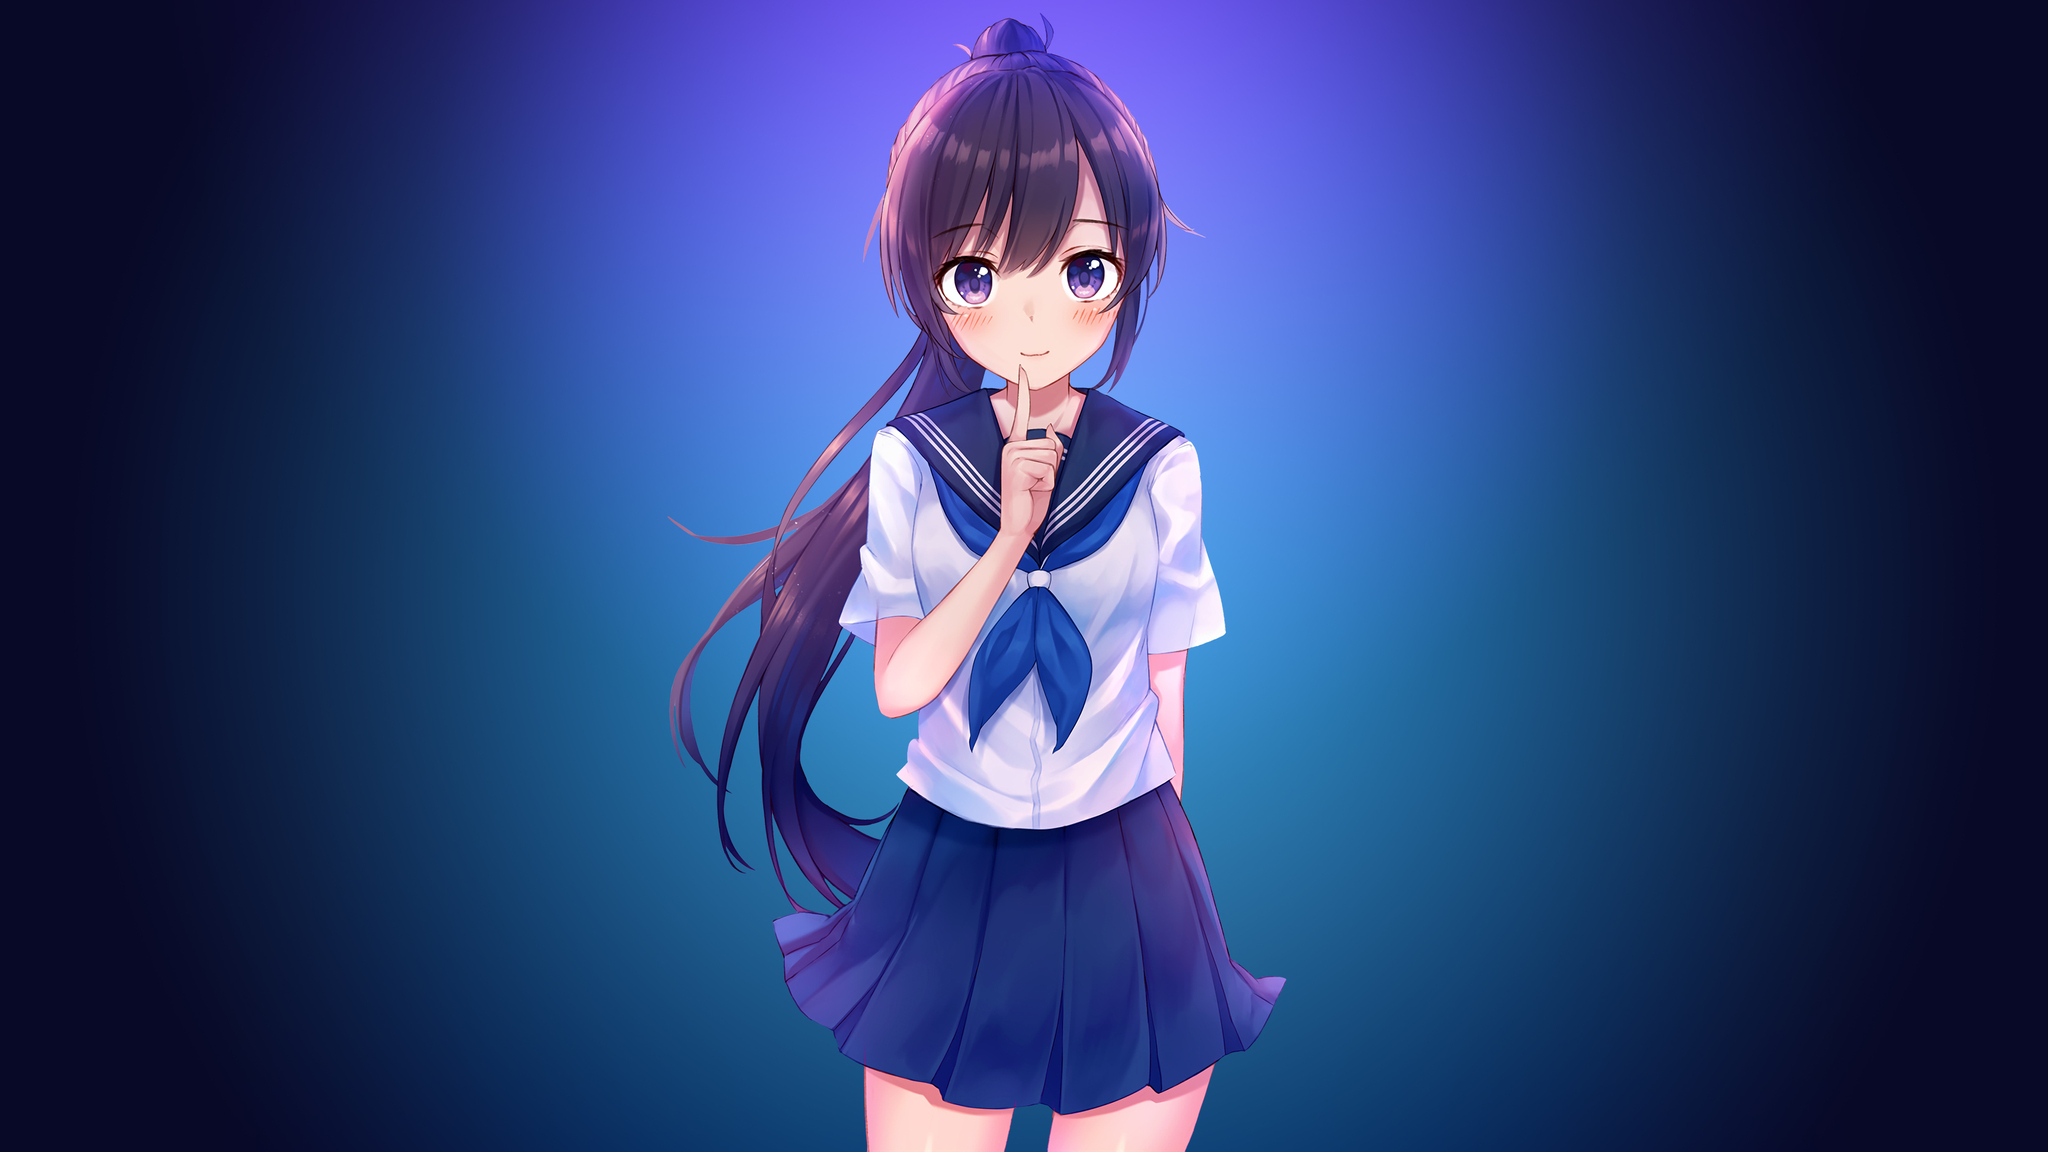 2048x1152 Anime Girl In School Uniform 4k 2048x1152 Resolution Hd